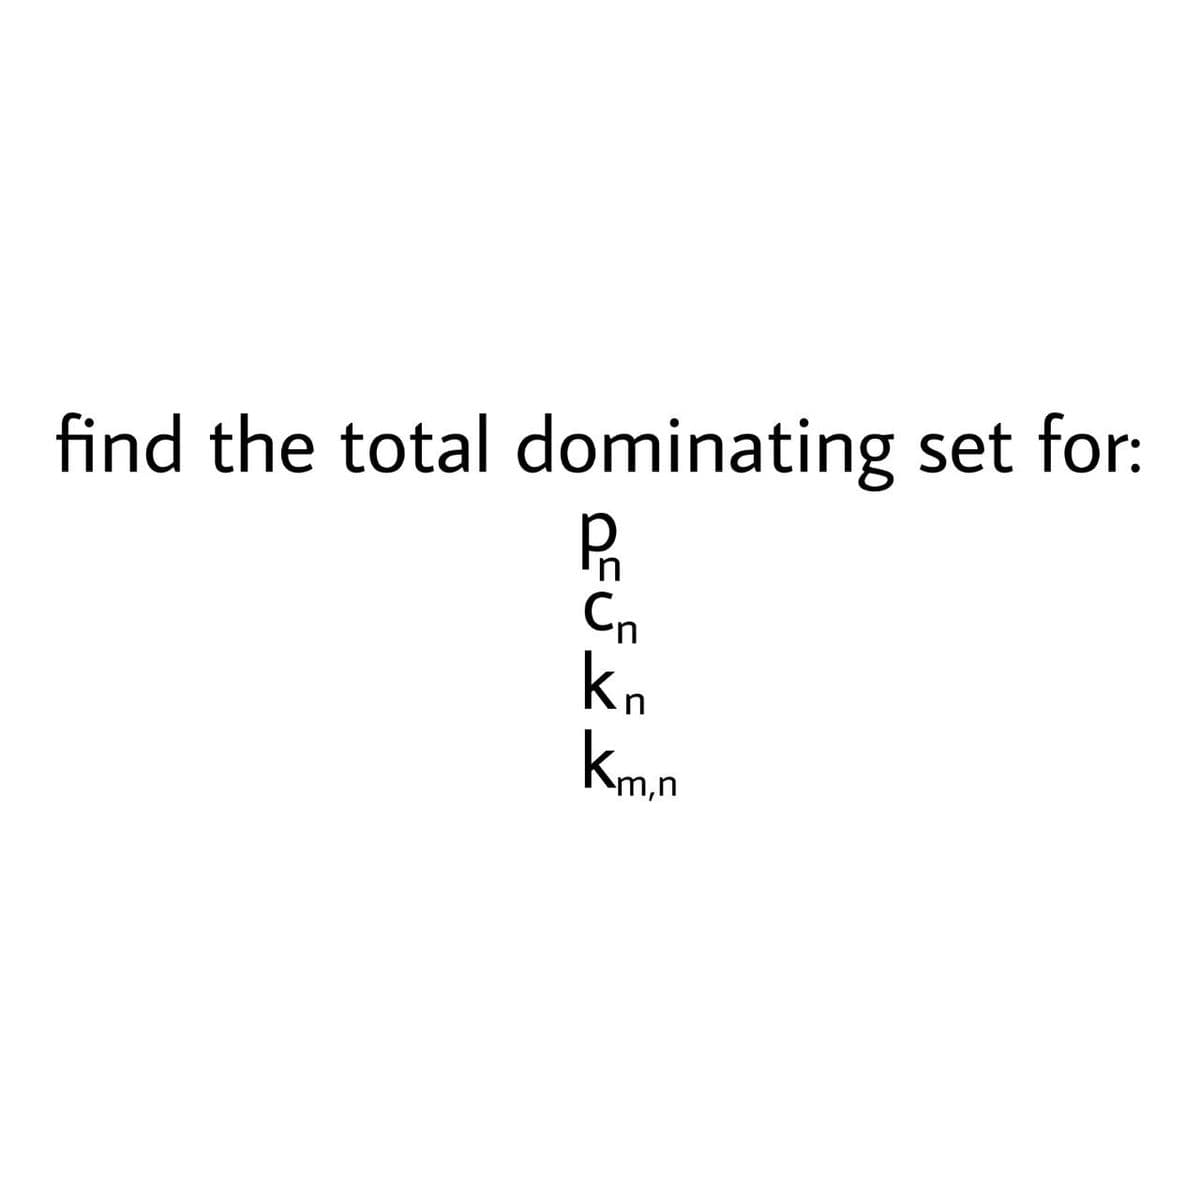 find the total dominating set for:
Cn
kn
kmn
